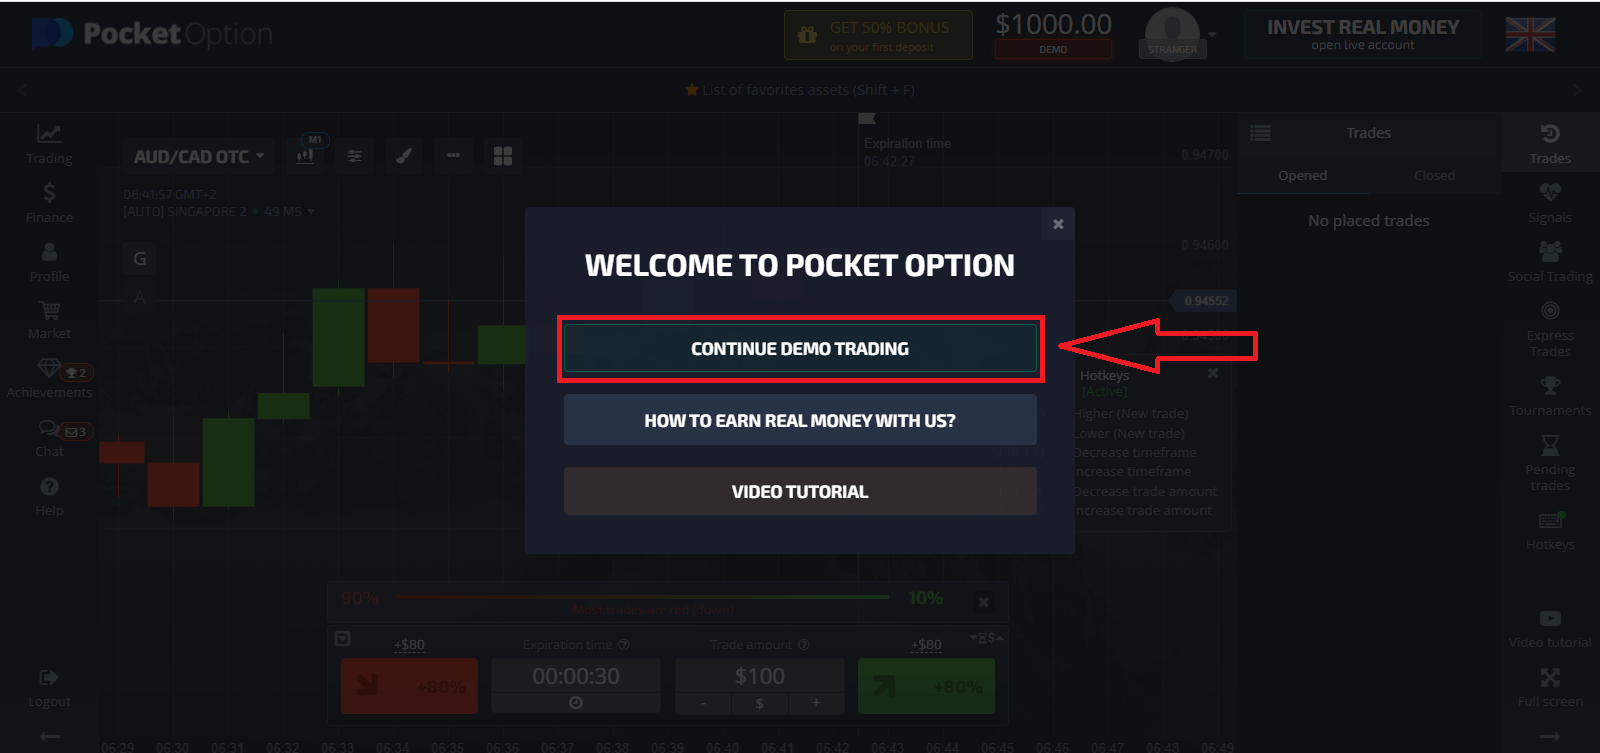 Pocket Optionで口座を開設してお金を引き出す方法